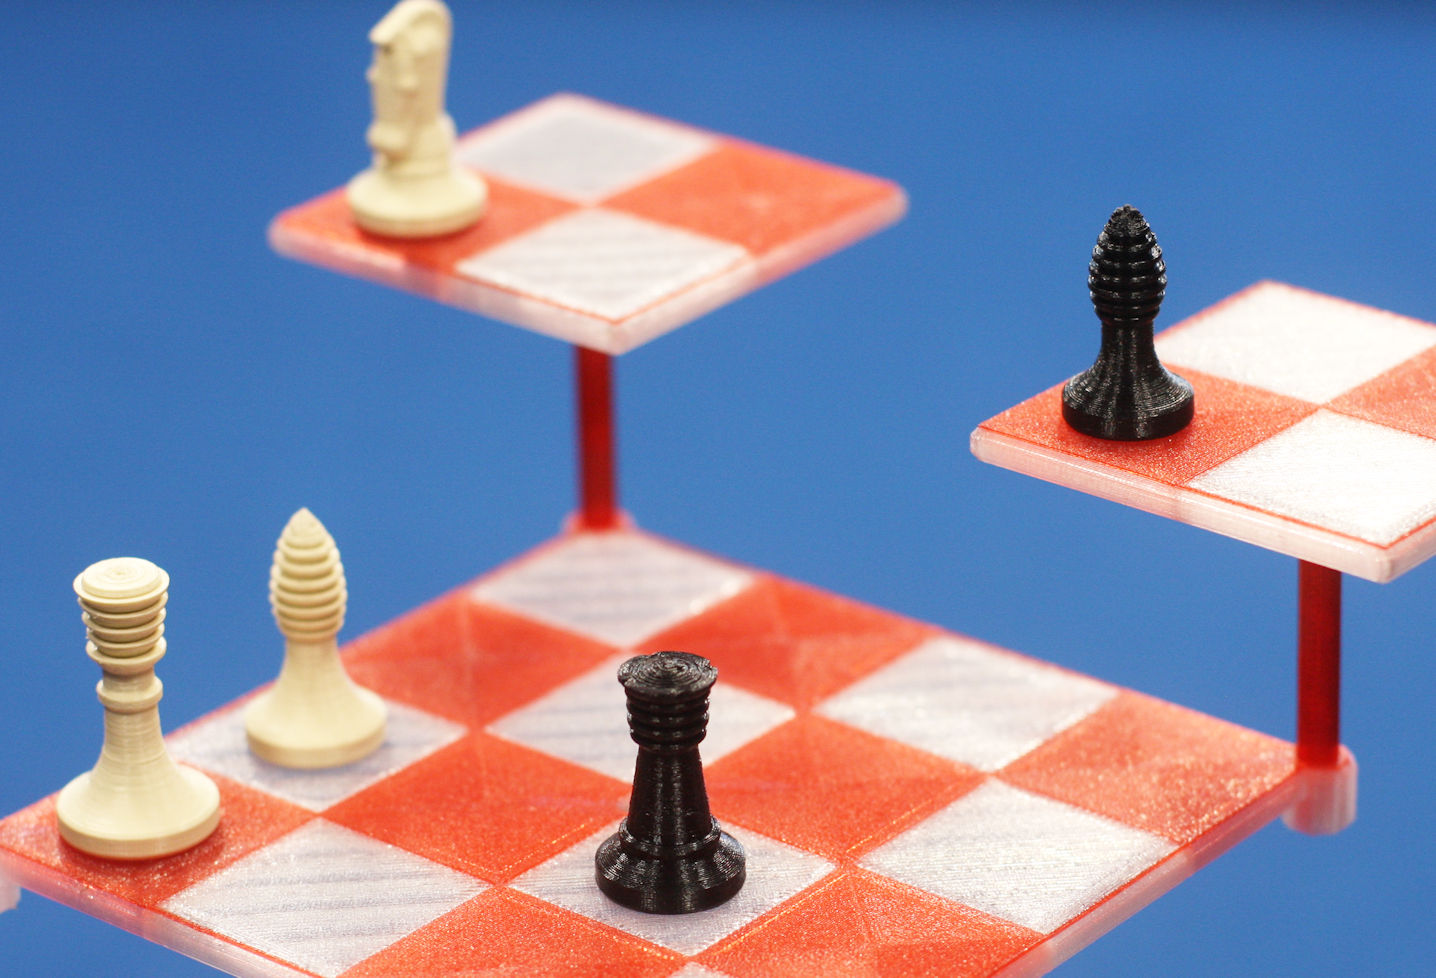 3D Printed Star Trek 3D Chess Set